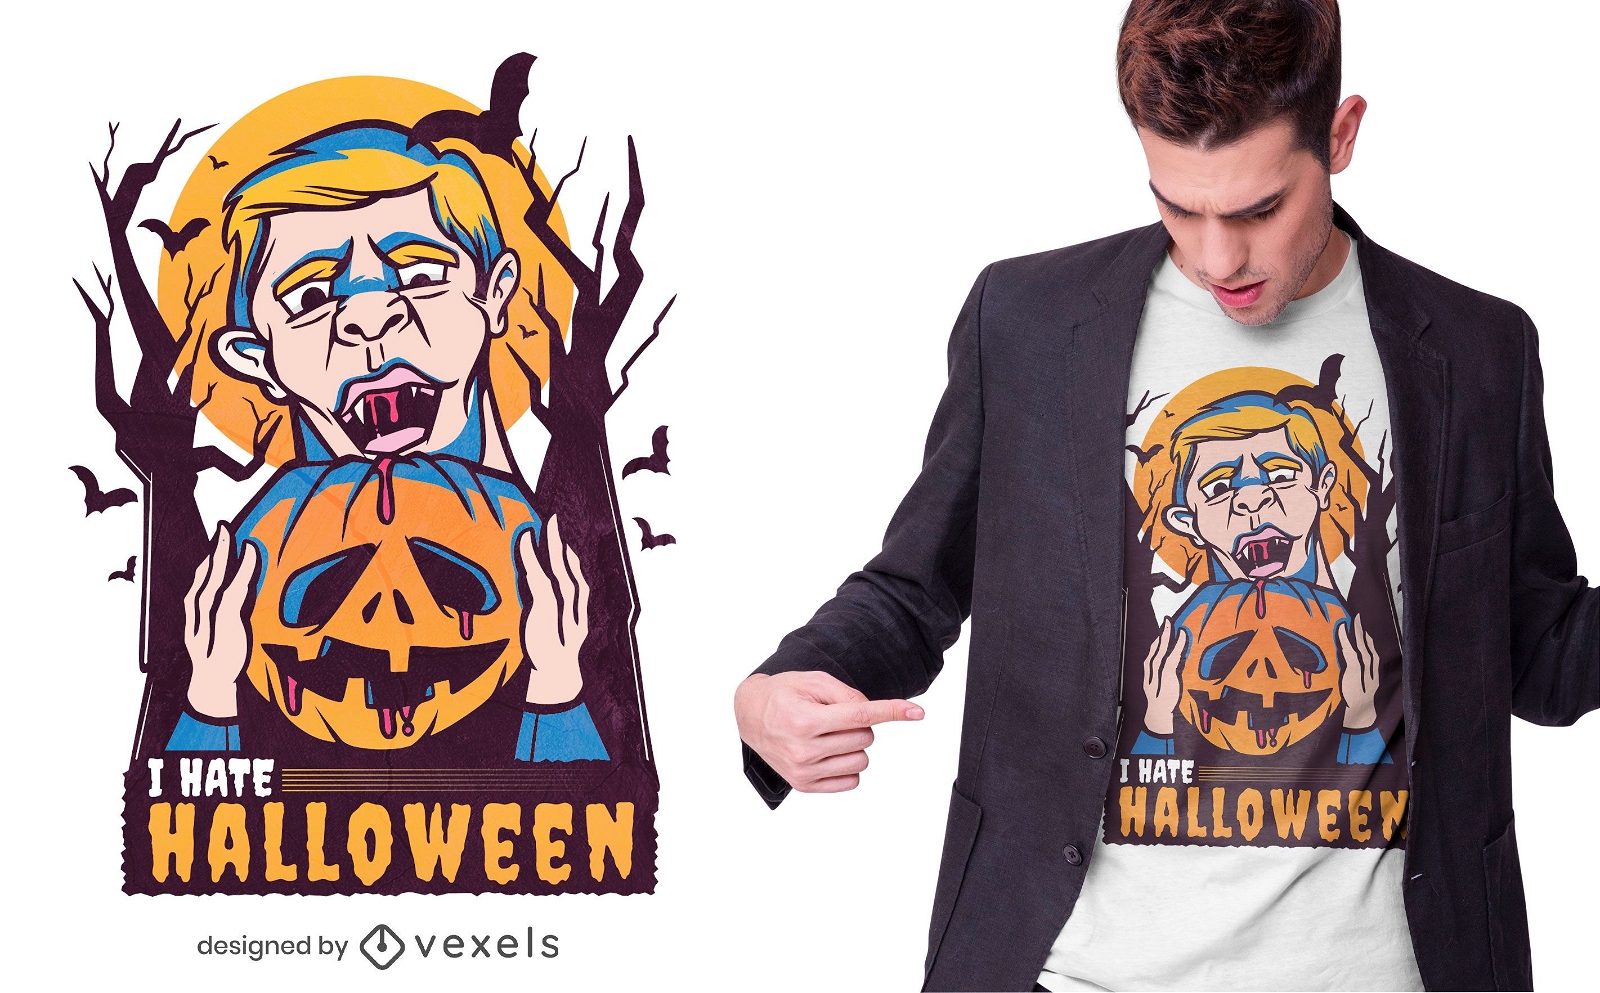 I hate halloween t-shirt design